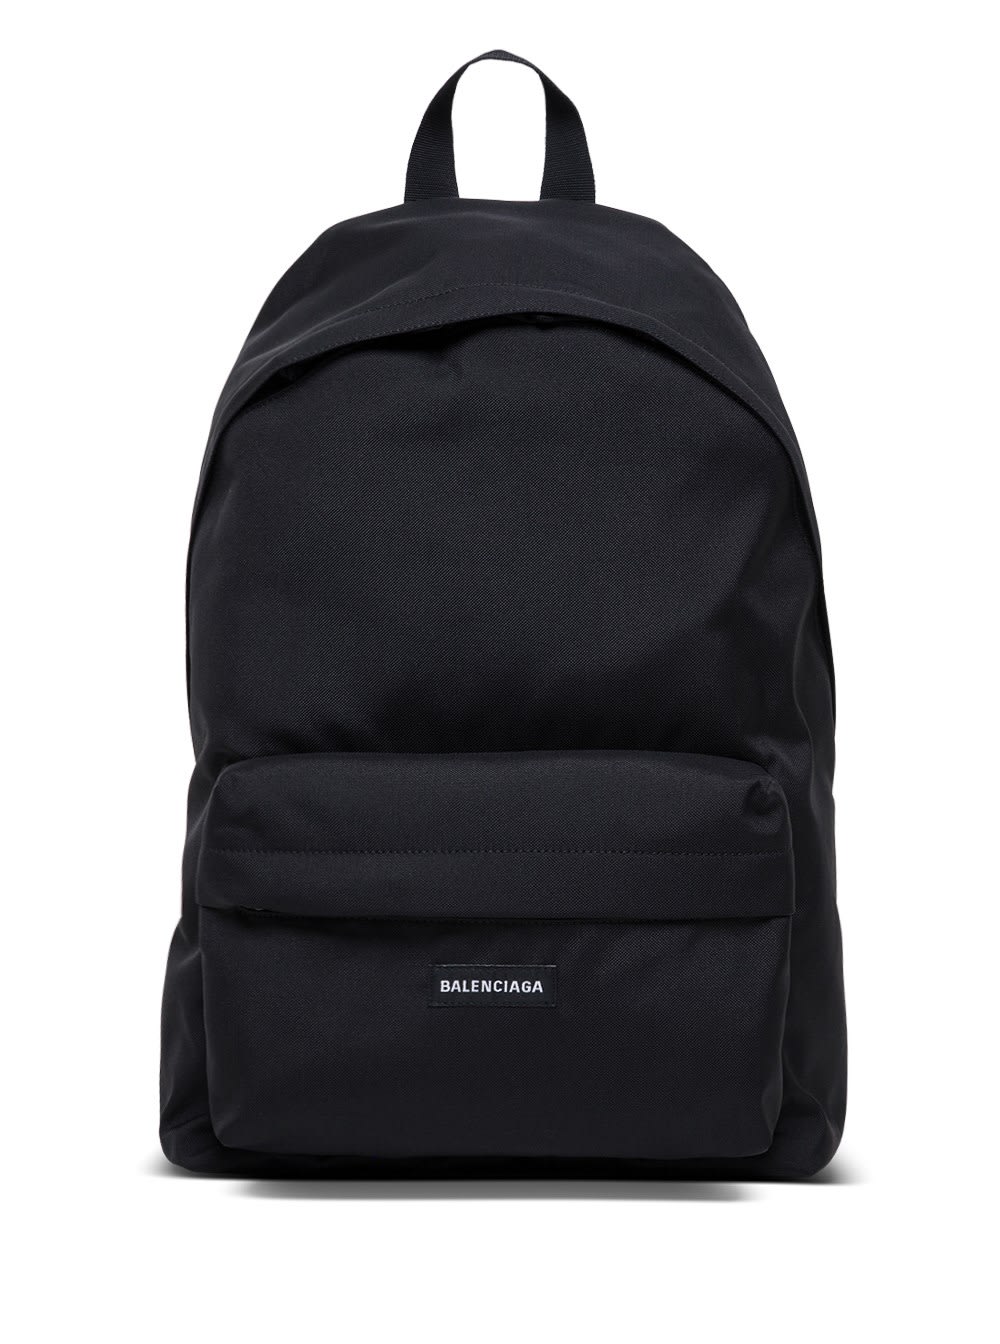 Balenciaga Black Nylon Backpack With Logo